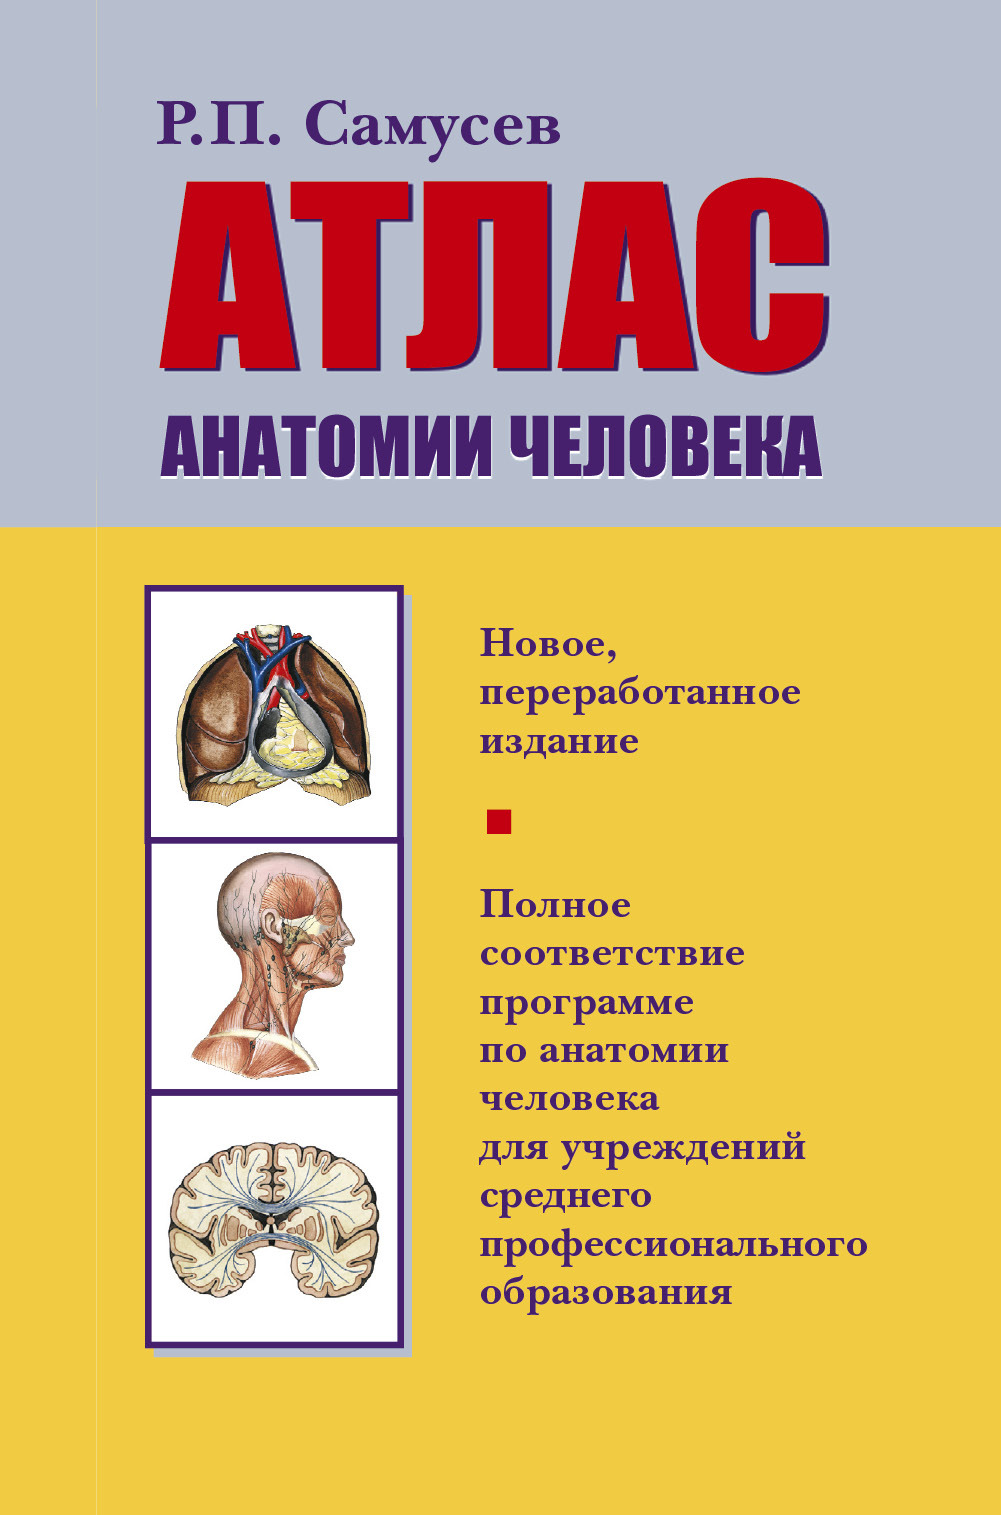 Атлас анатомии человека (Самусев Р.П.)